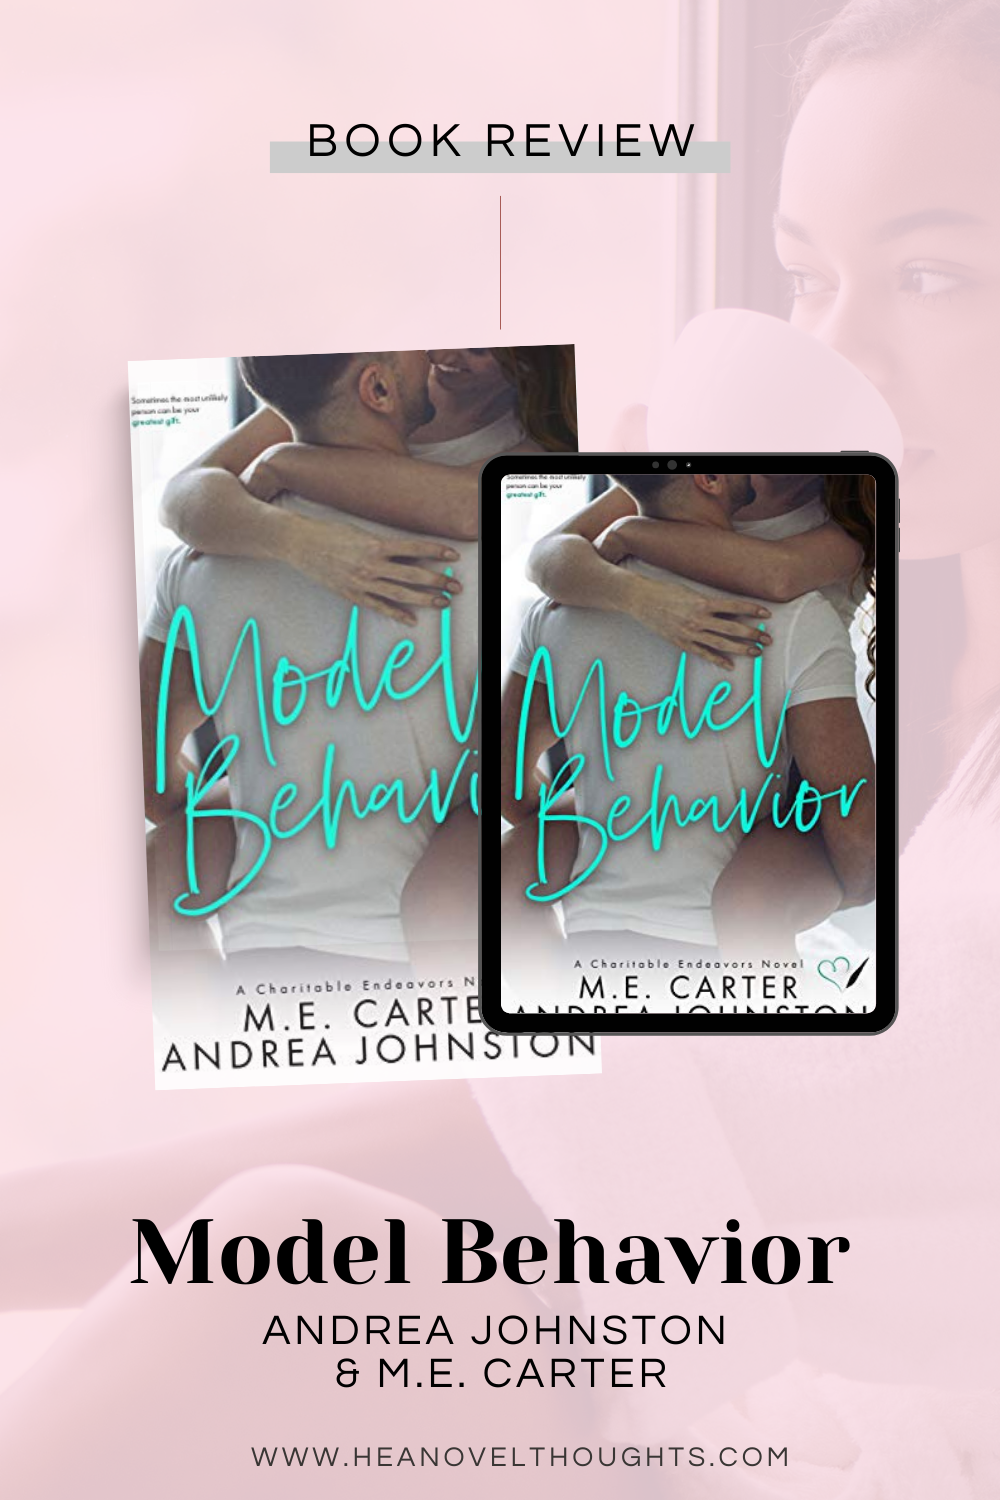 Model Behavior by M.E. Carter and Andrea Johnston